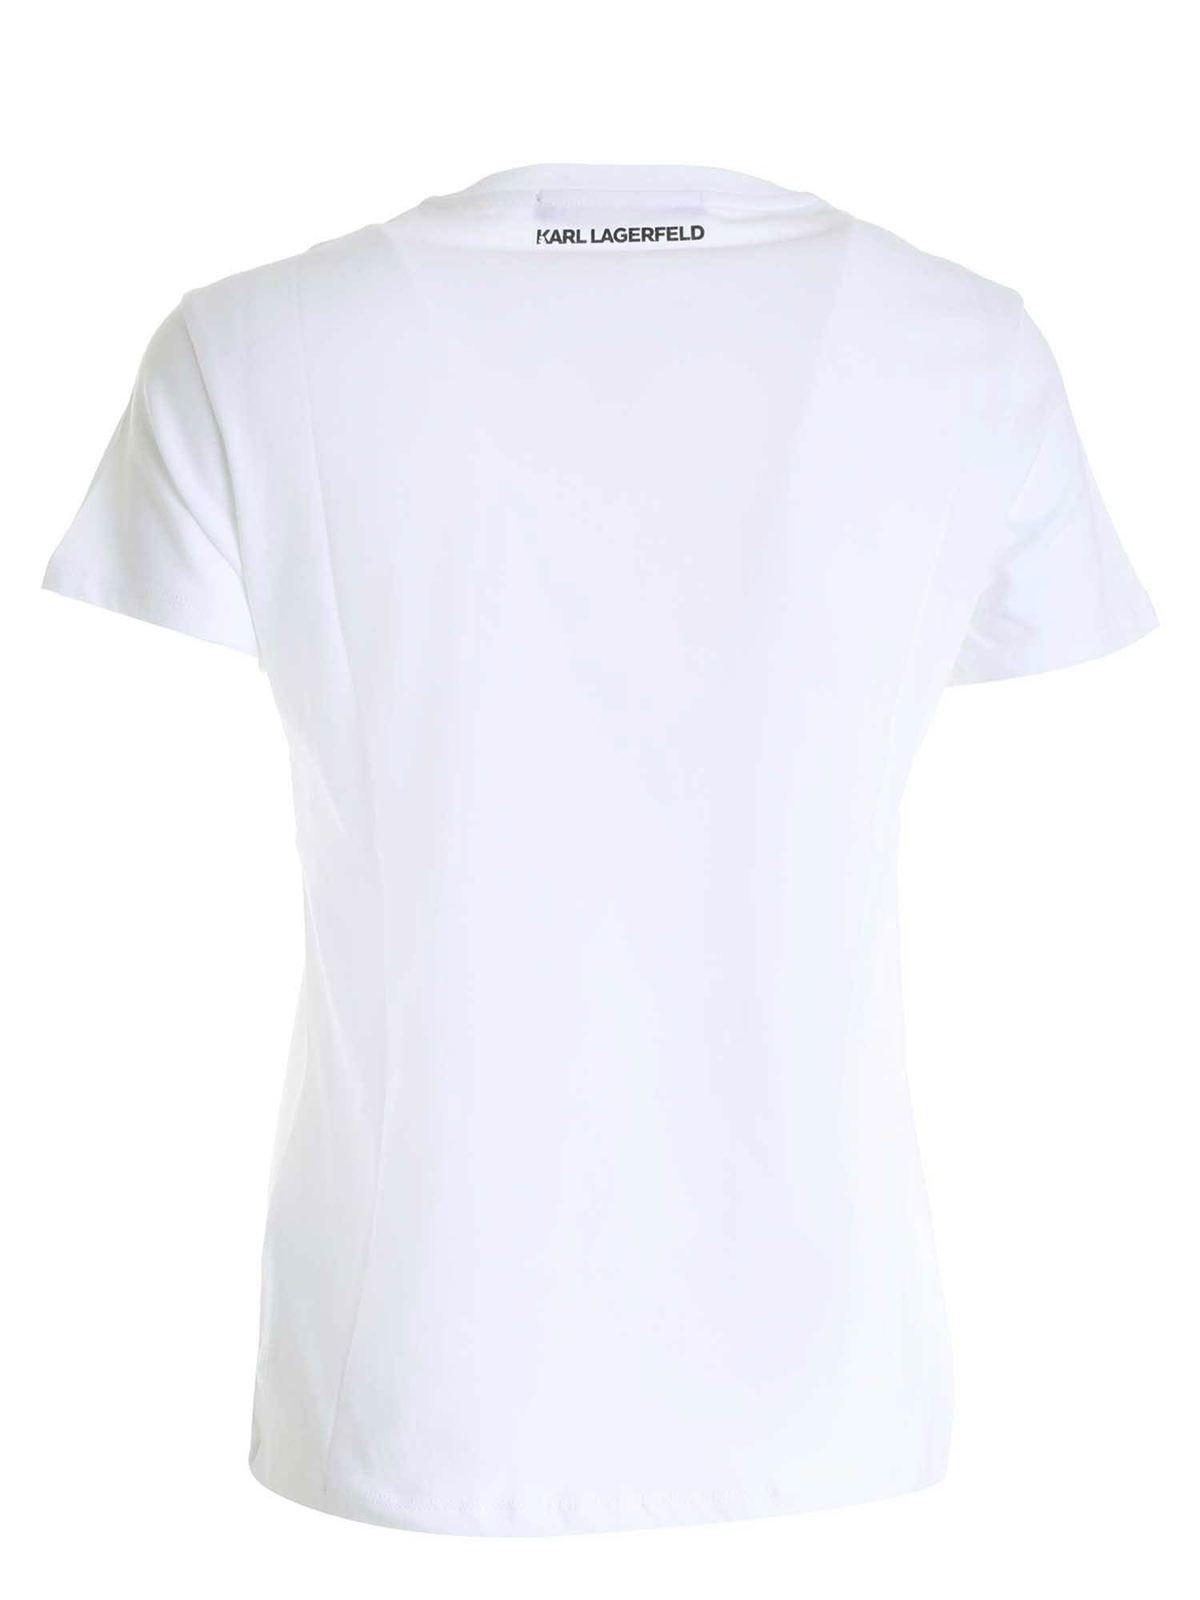 Karl Lagerfeld - Square Logo in white - 205W1711100